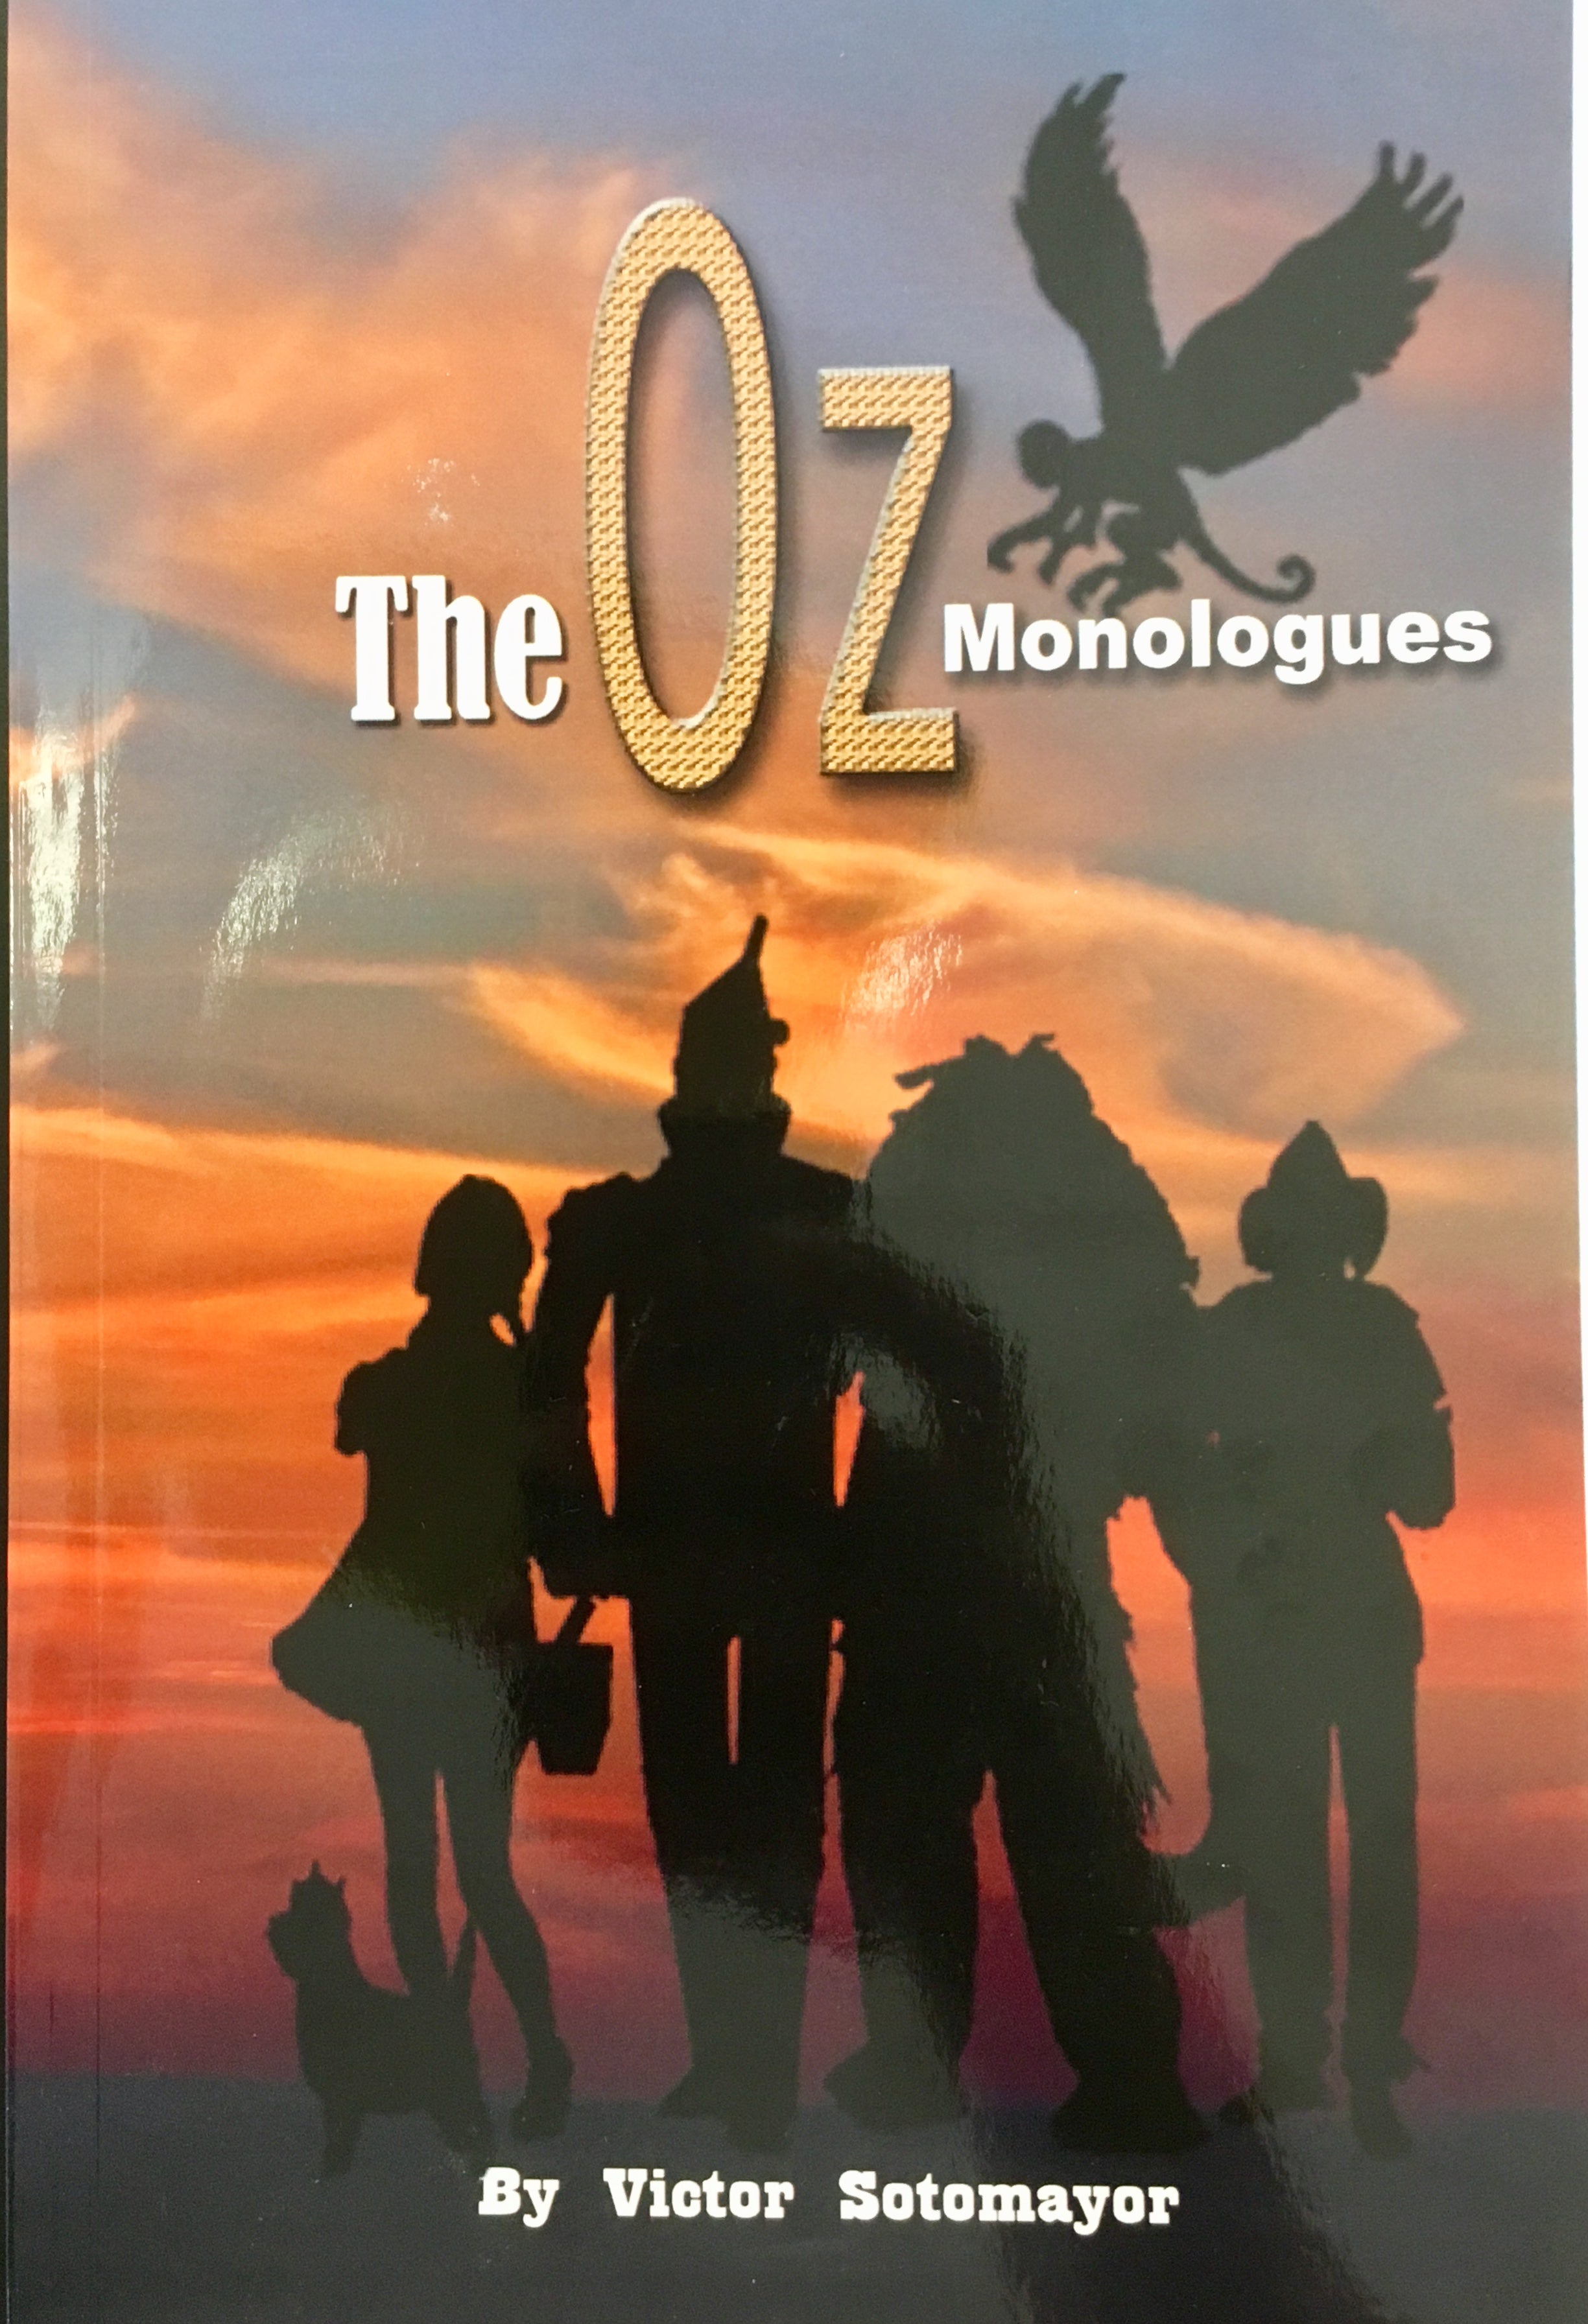 The Oz Monologues